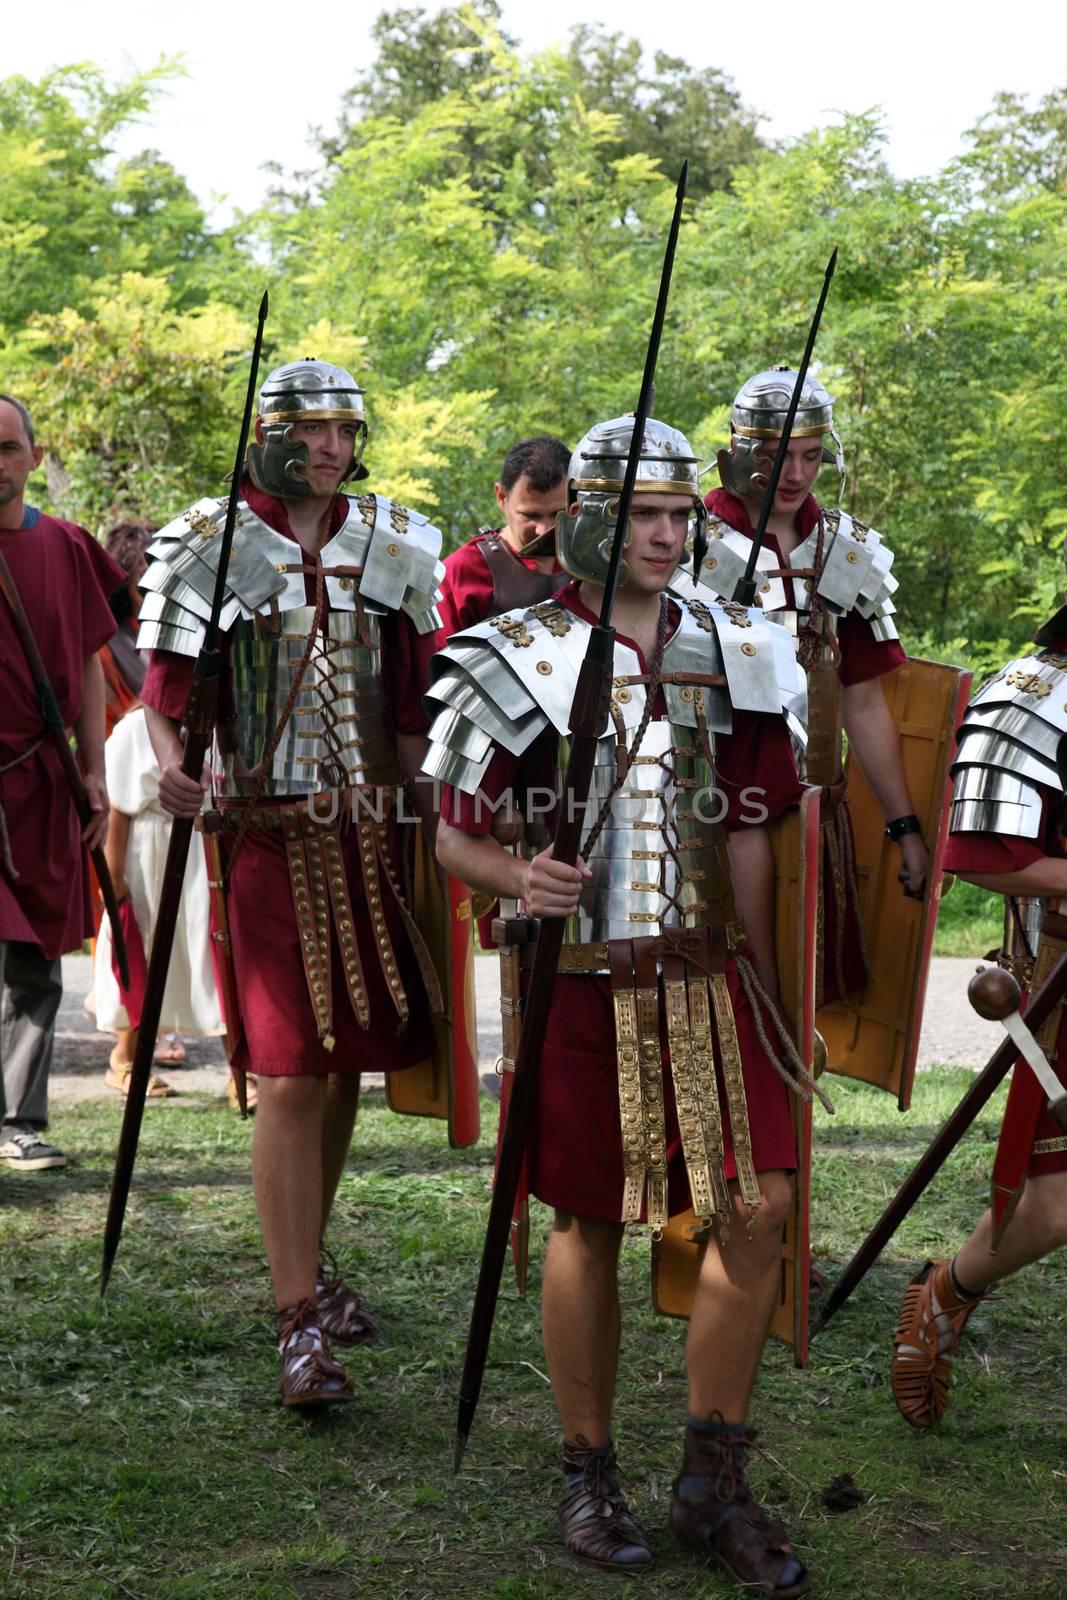 In Andautonija, ancient Roman settlement near Zagreb held Dionysus festivities on Sep 15, 2013 in Zagreb, Croatia.